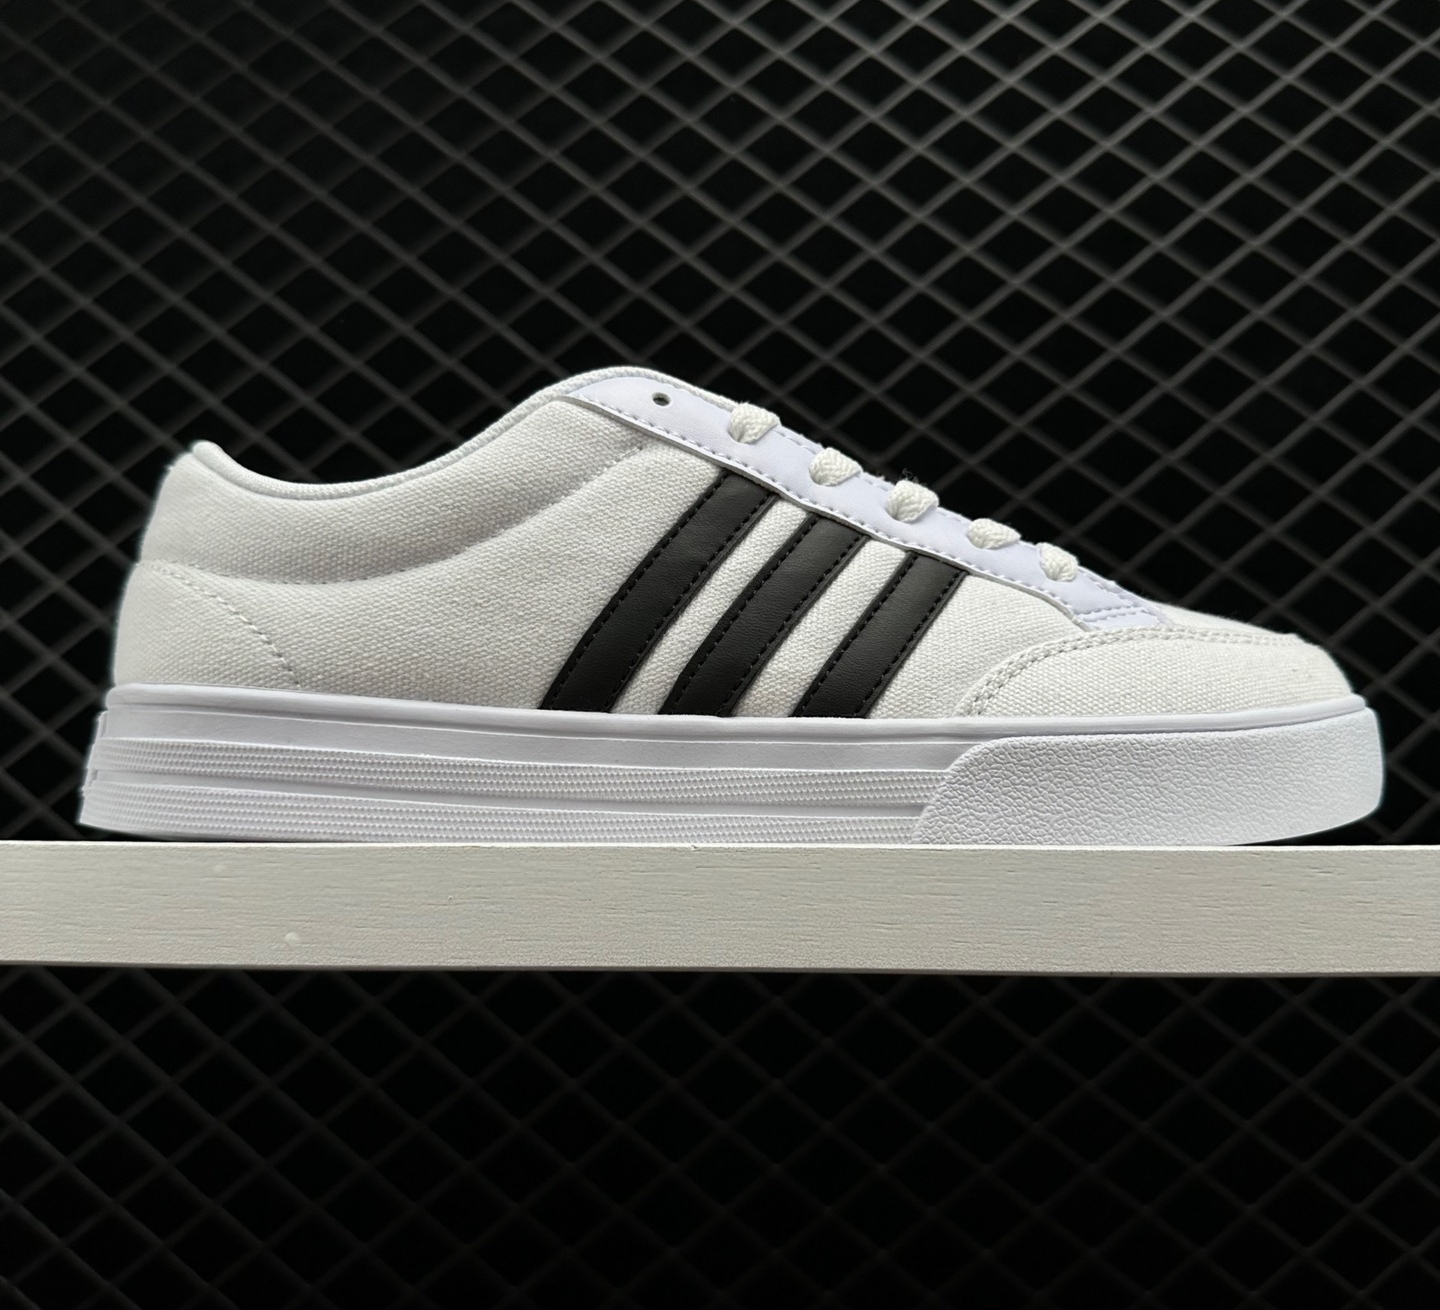 Adidas VS Set 'White Black' AW3889 - Stylish and Versatile Sneakers